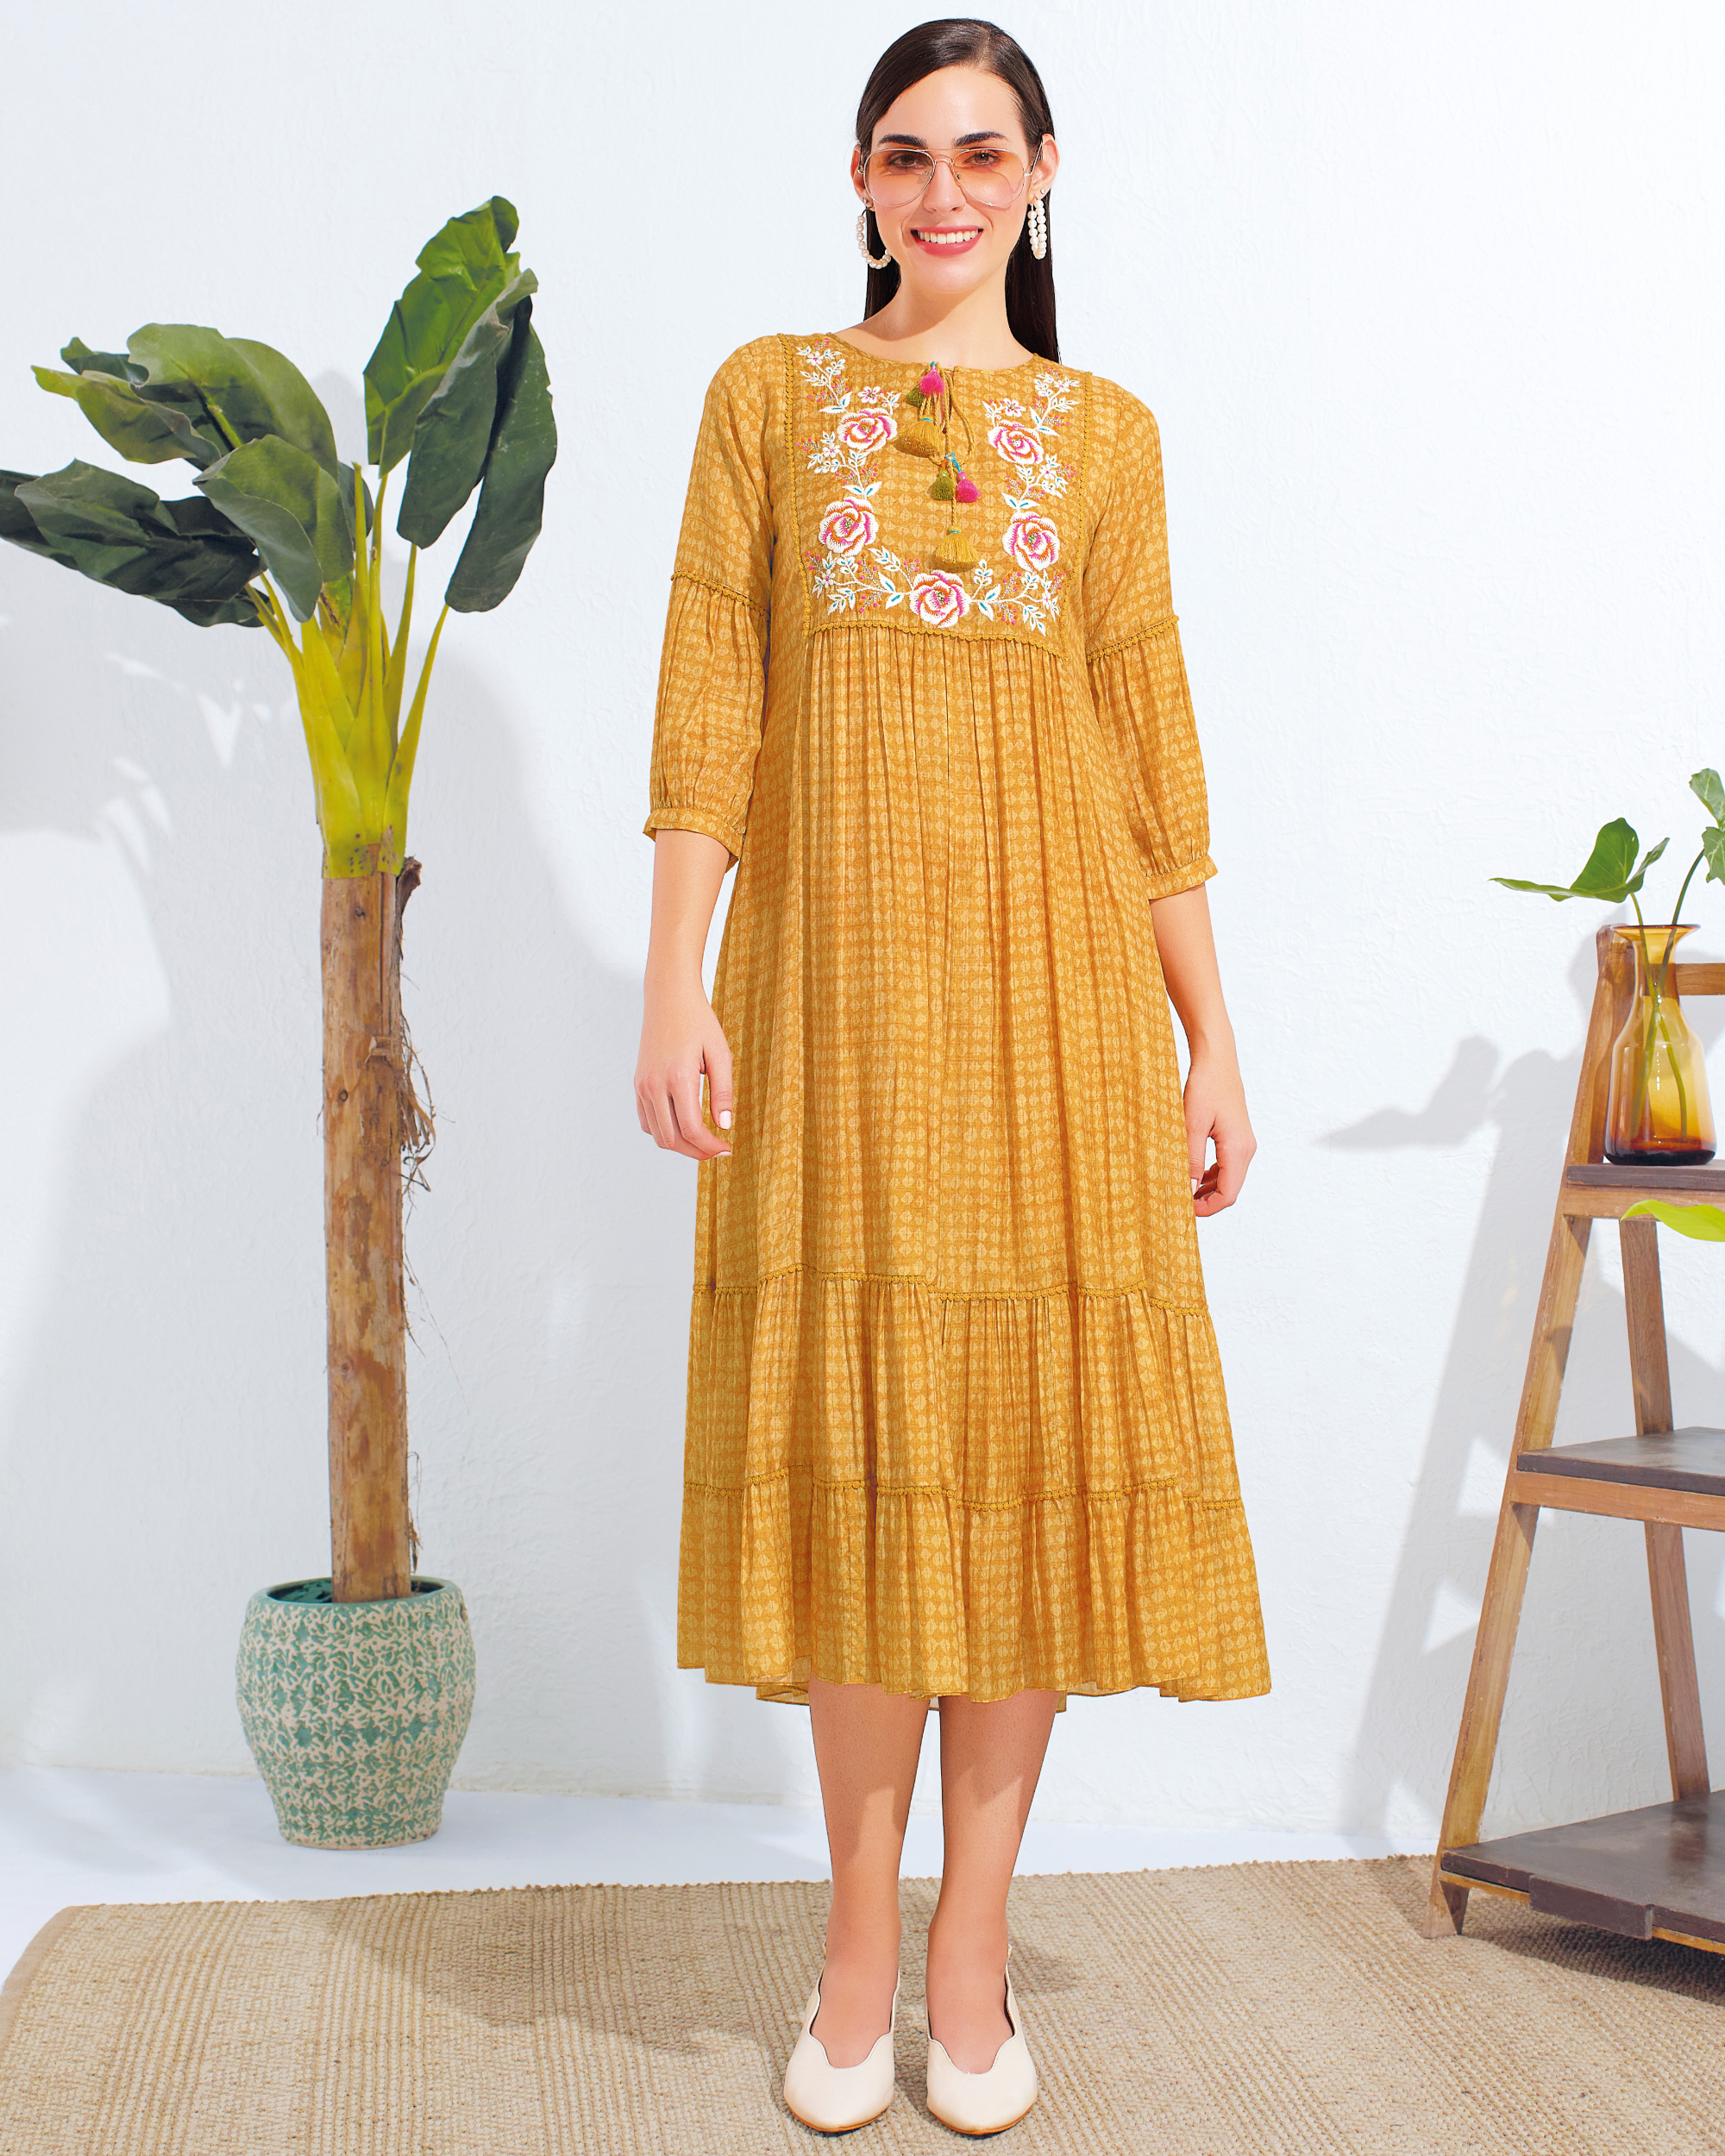 Mustard yellow embroidered midi dress